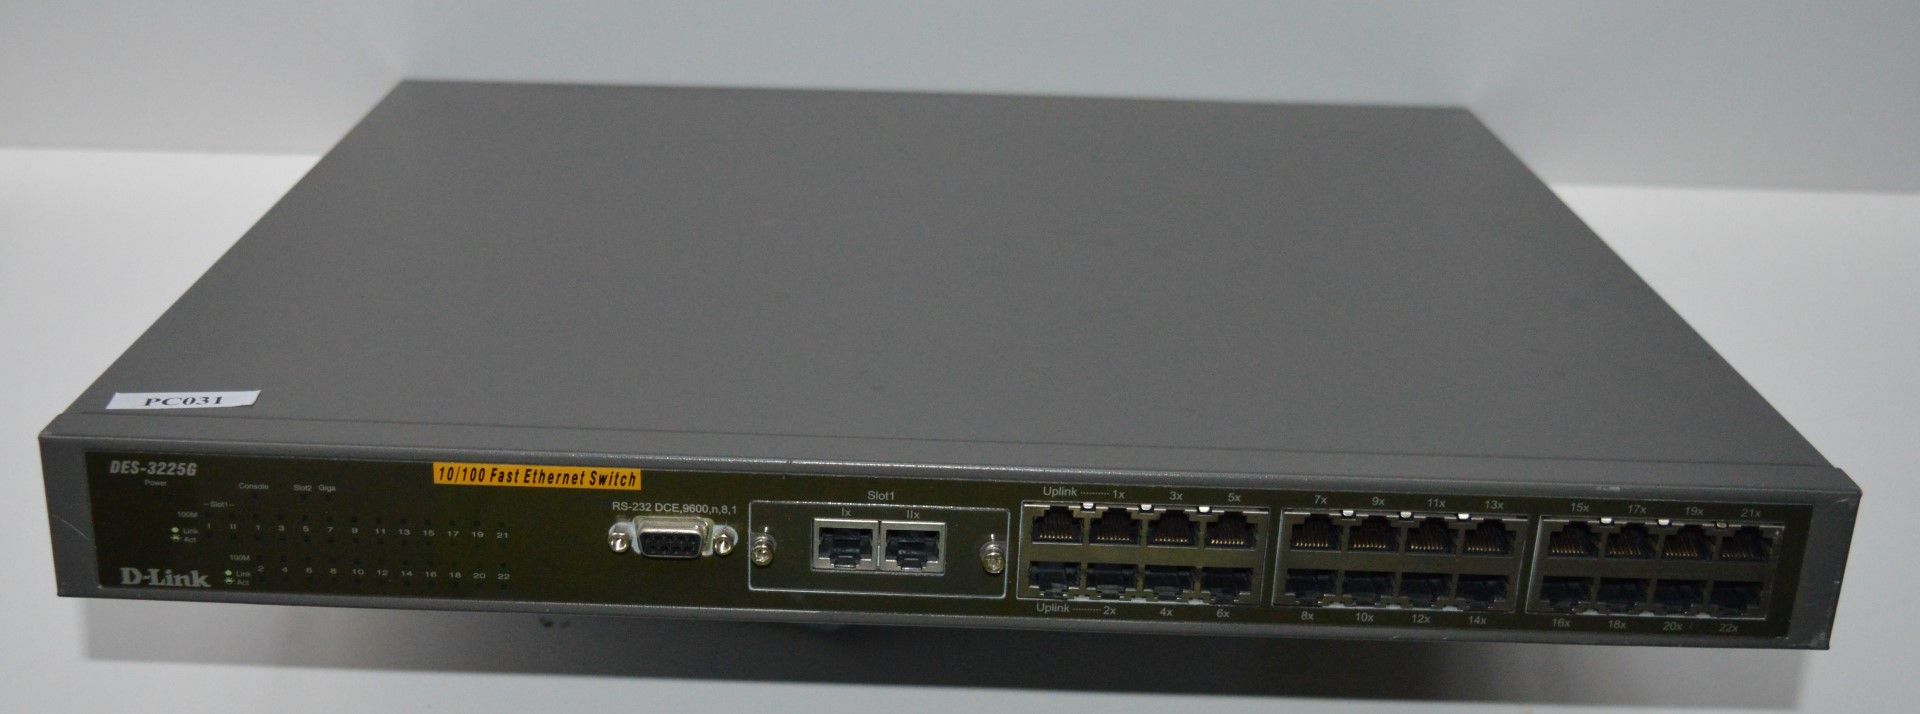 1 x D-Link DES 3225G 24 ports Fast Ethernet 100Base-TX Managed Switch - CL159 - Ref PC031 -